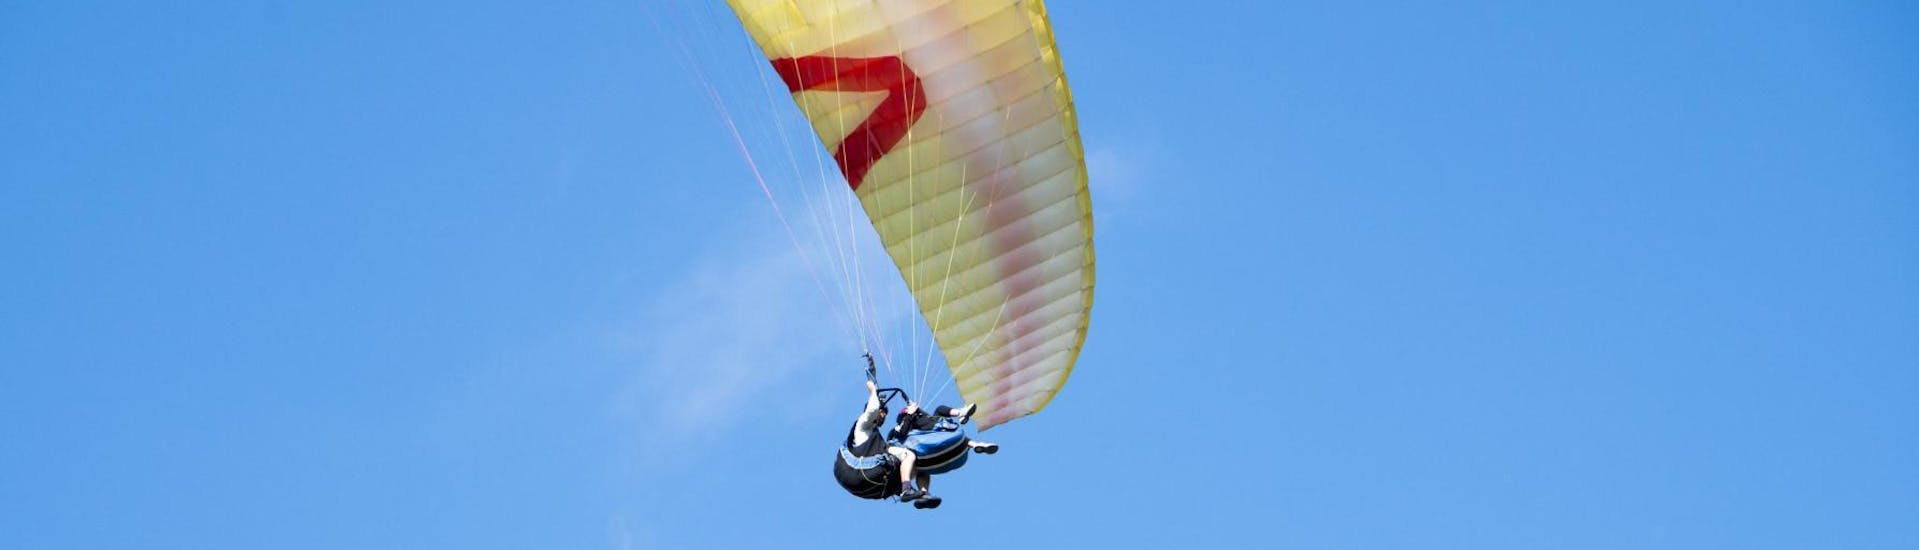 thermic-tandem-paragliding-on-the-dalmatian-coast-sky-riders-paragliding-croatia-hero